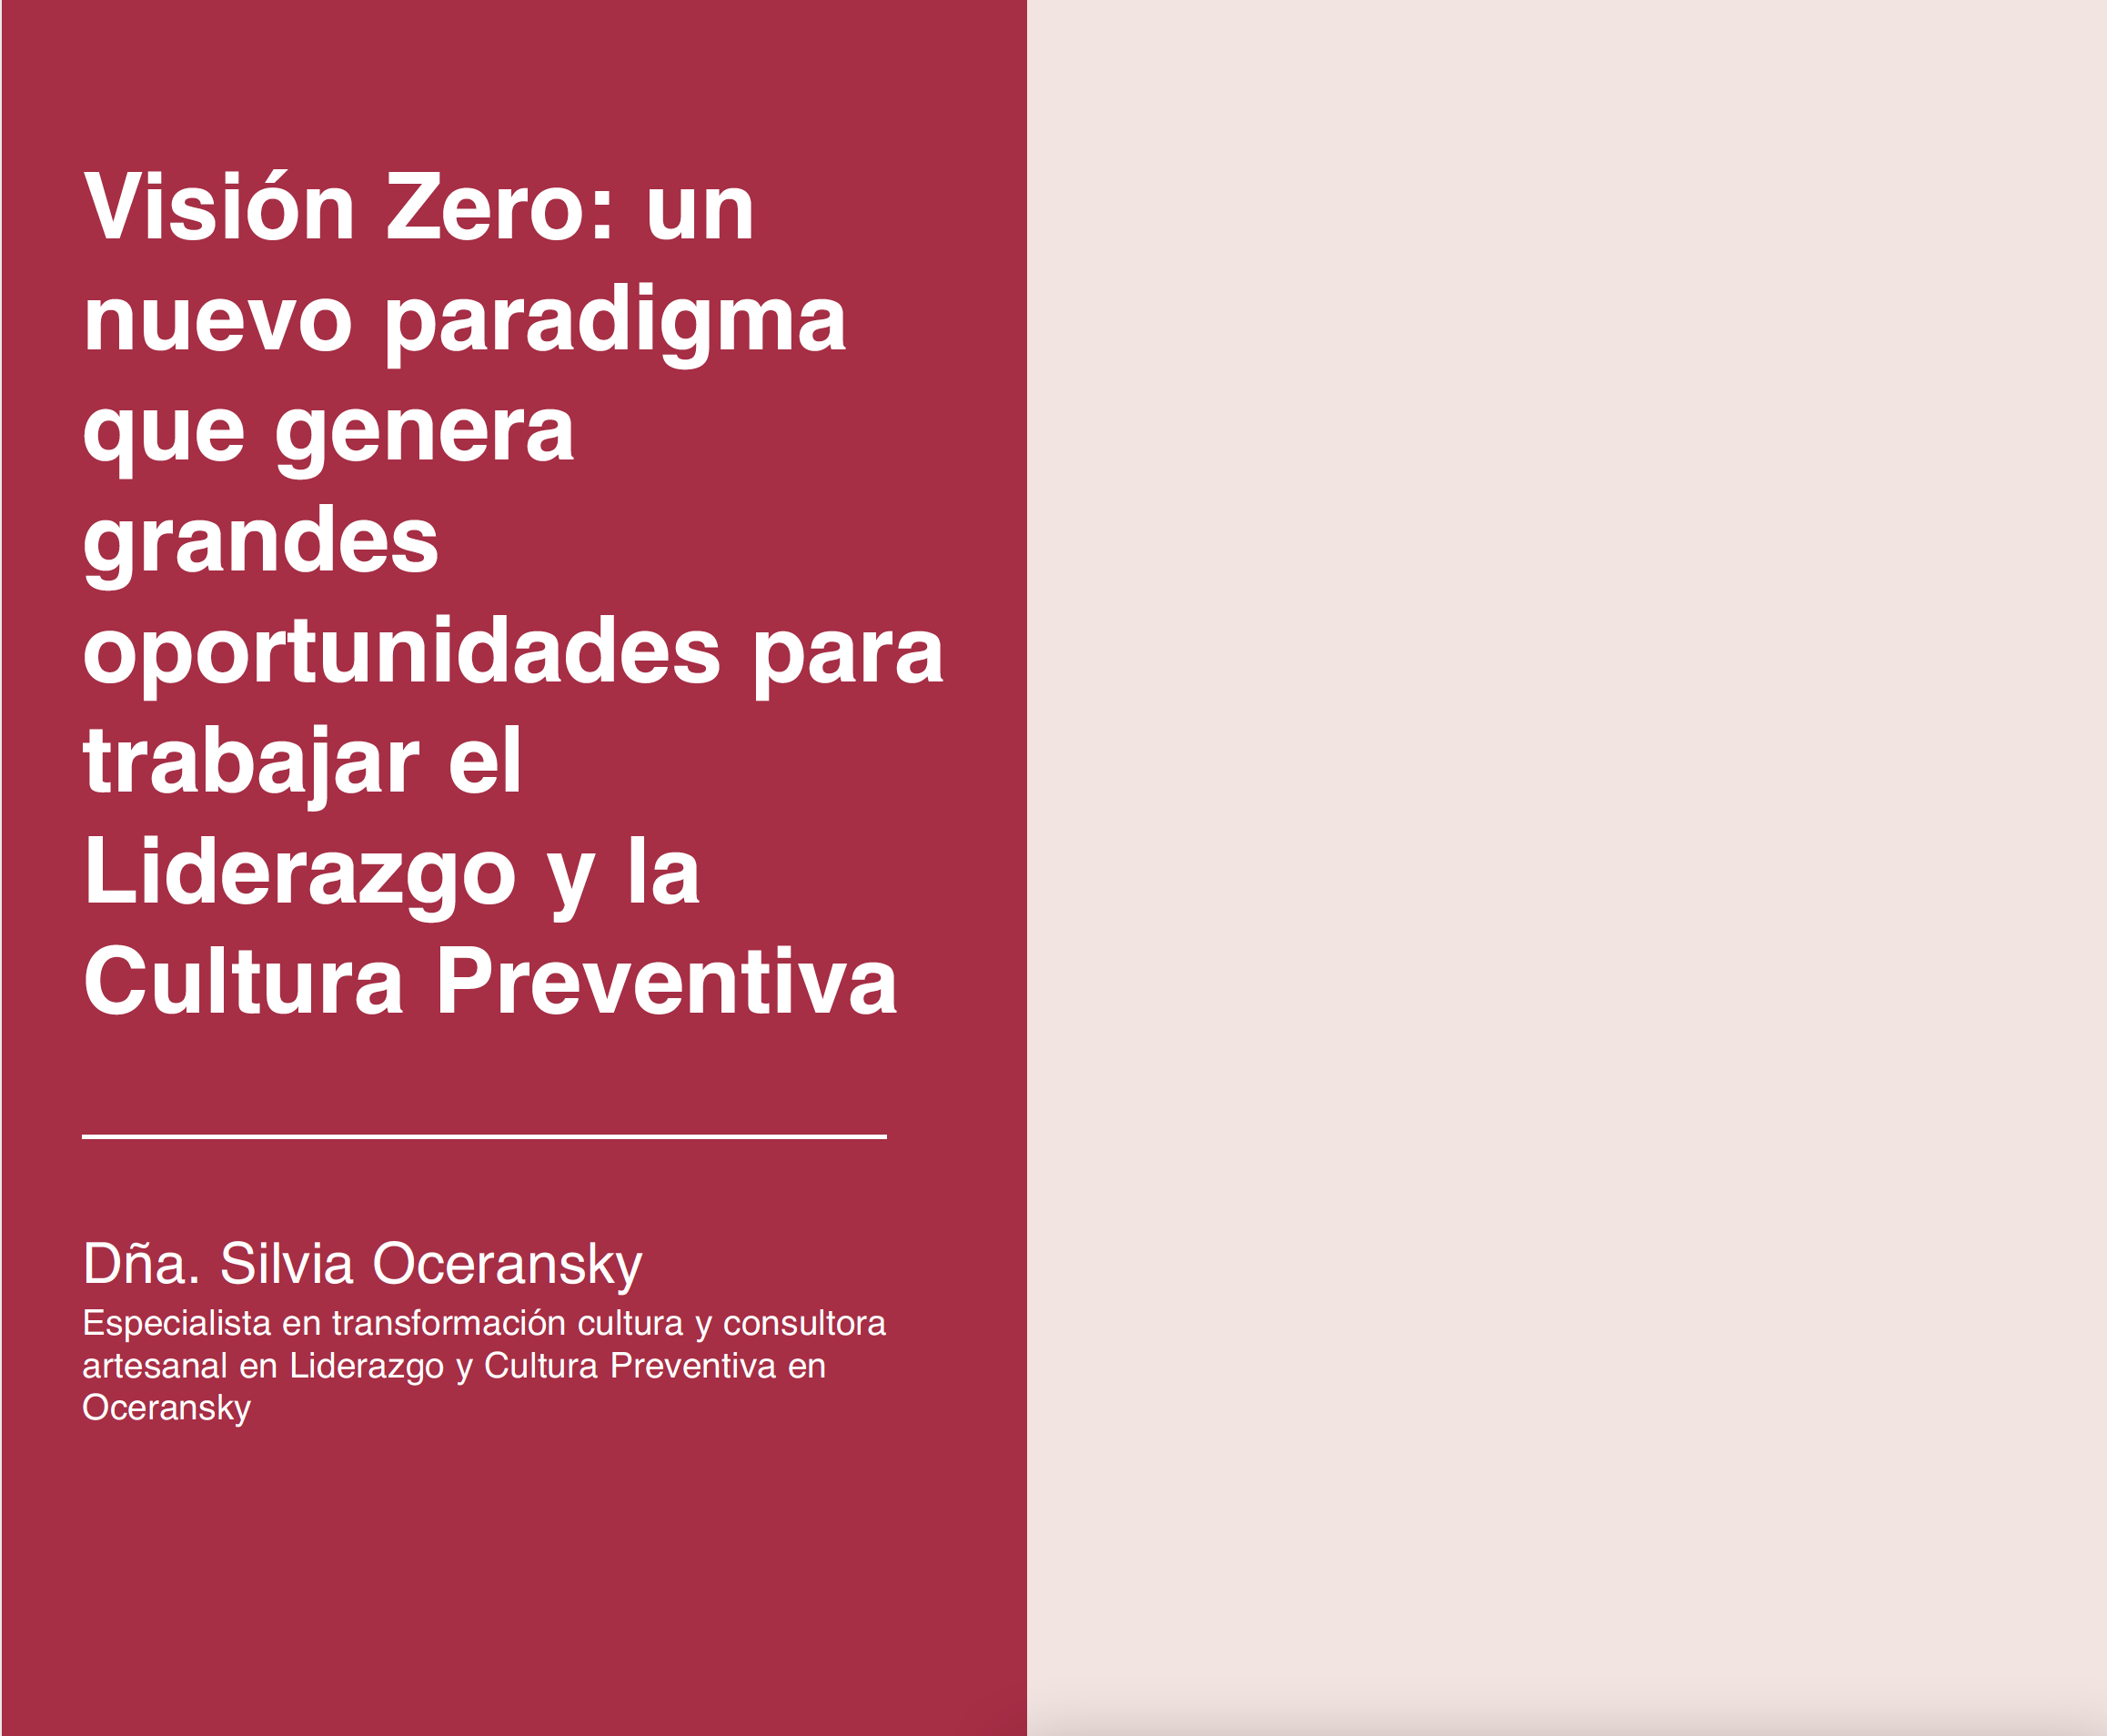 Vision Zero nuevo paradigma genera oportunidades liderazgo y cultura preventiva Silvia Oceransky IAPRL